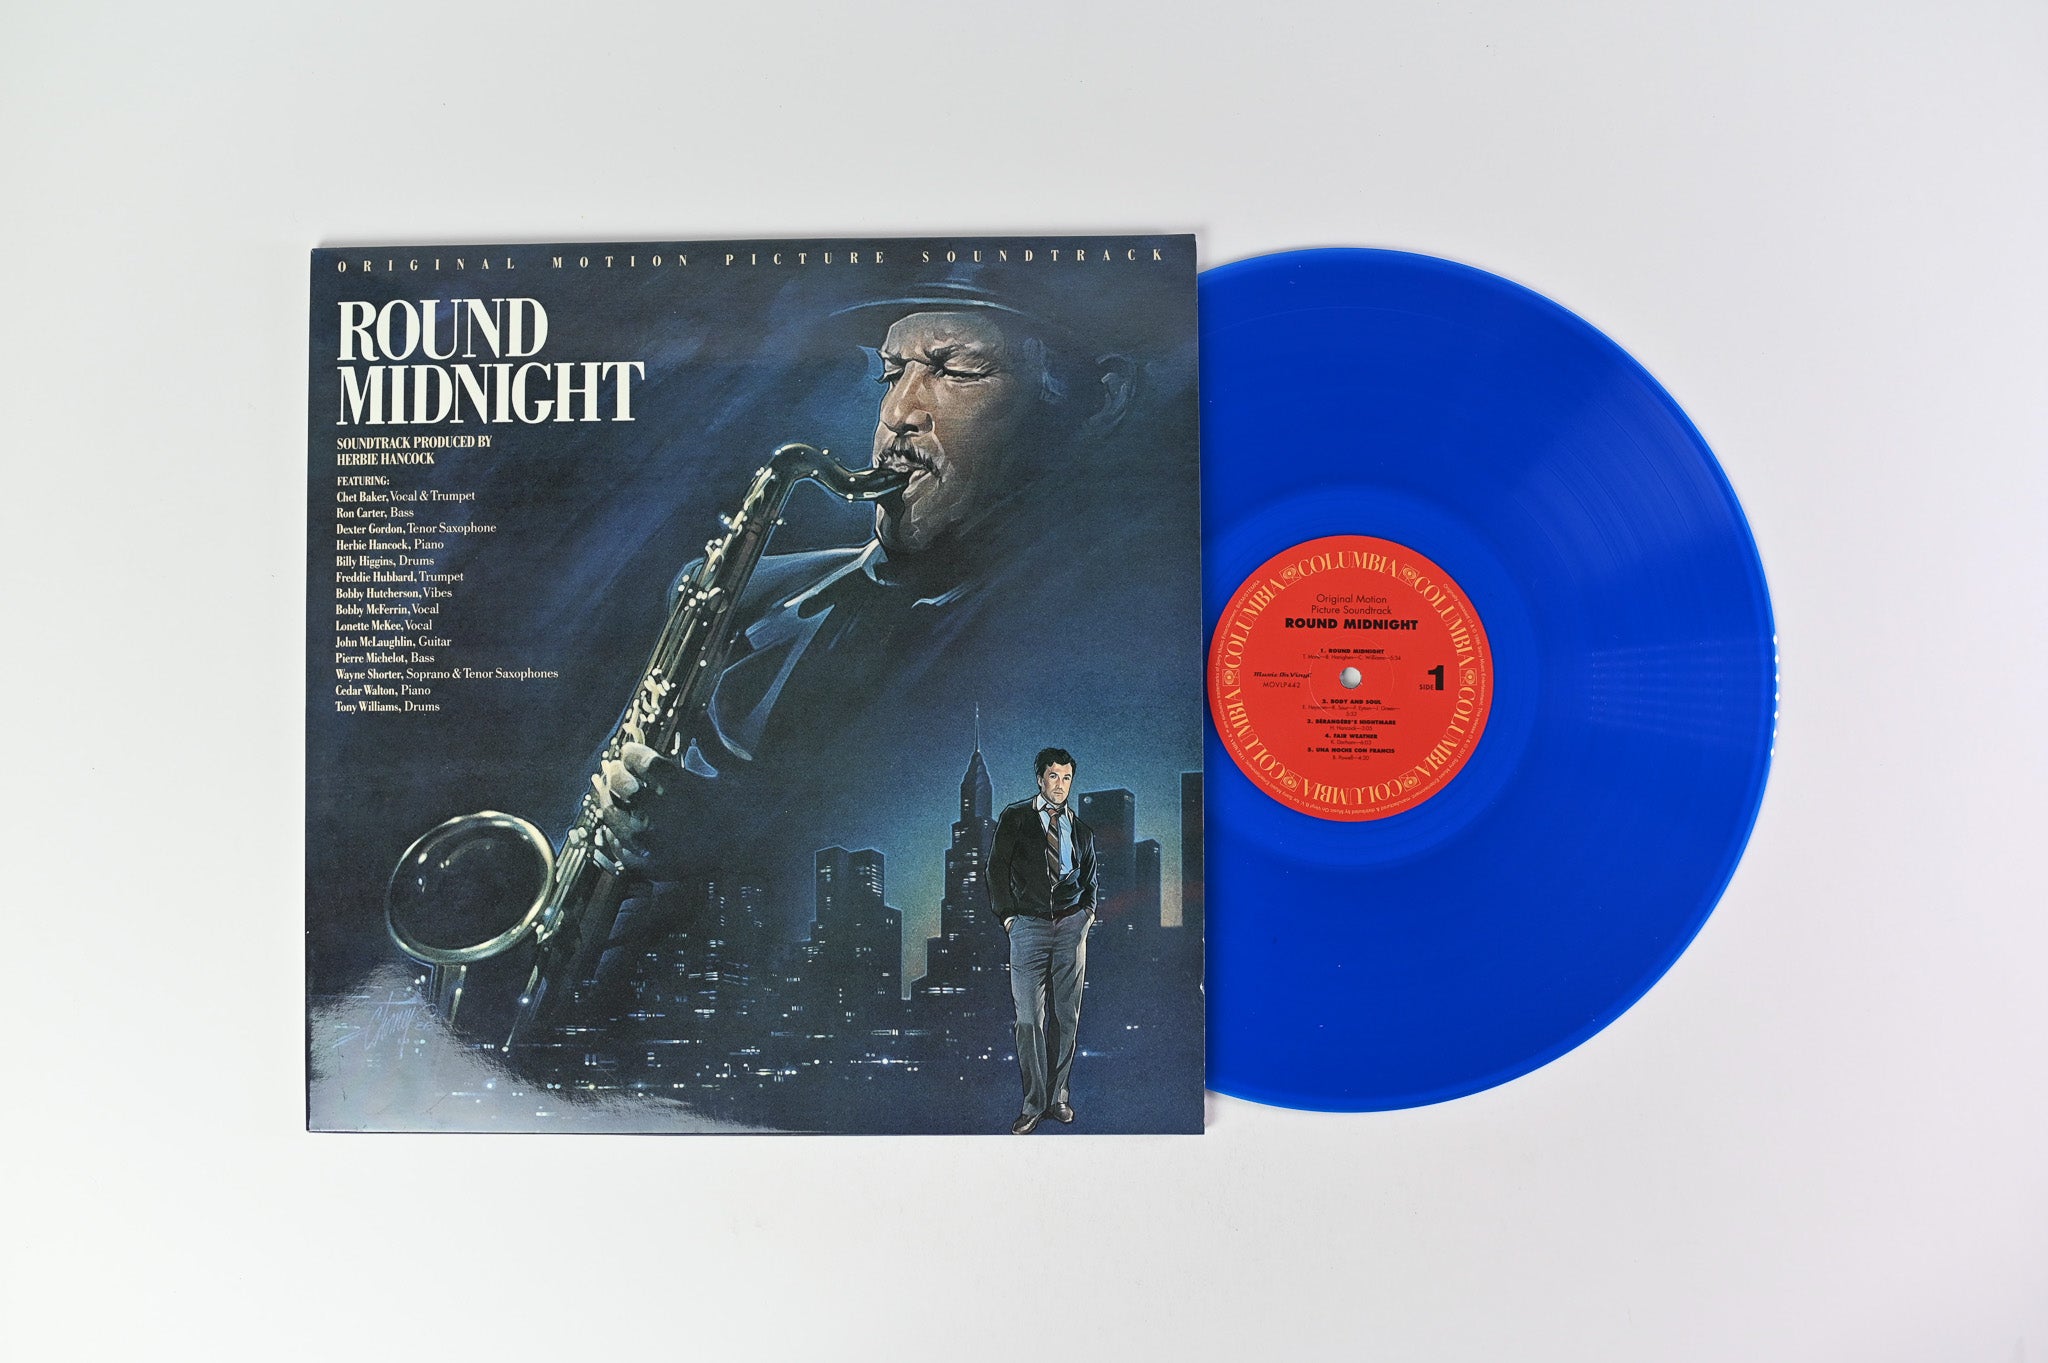 Herbie Hancock - Round Midnight (Original Motion Picture Soundtrack) on Music On Vinyl Translucent Blue Vinyl